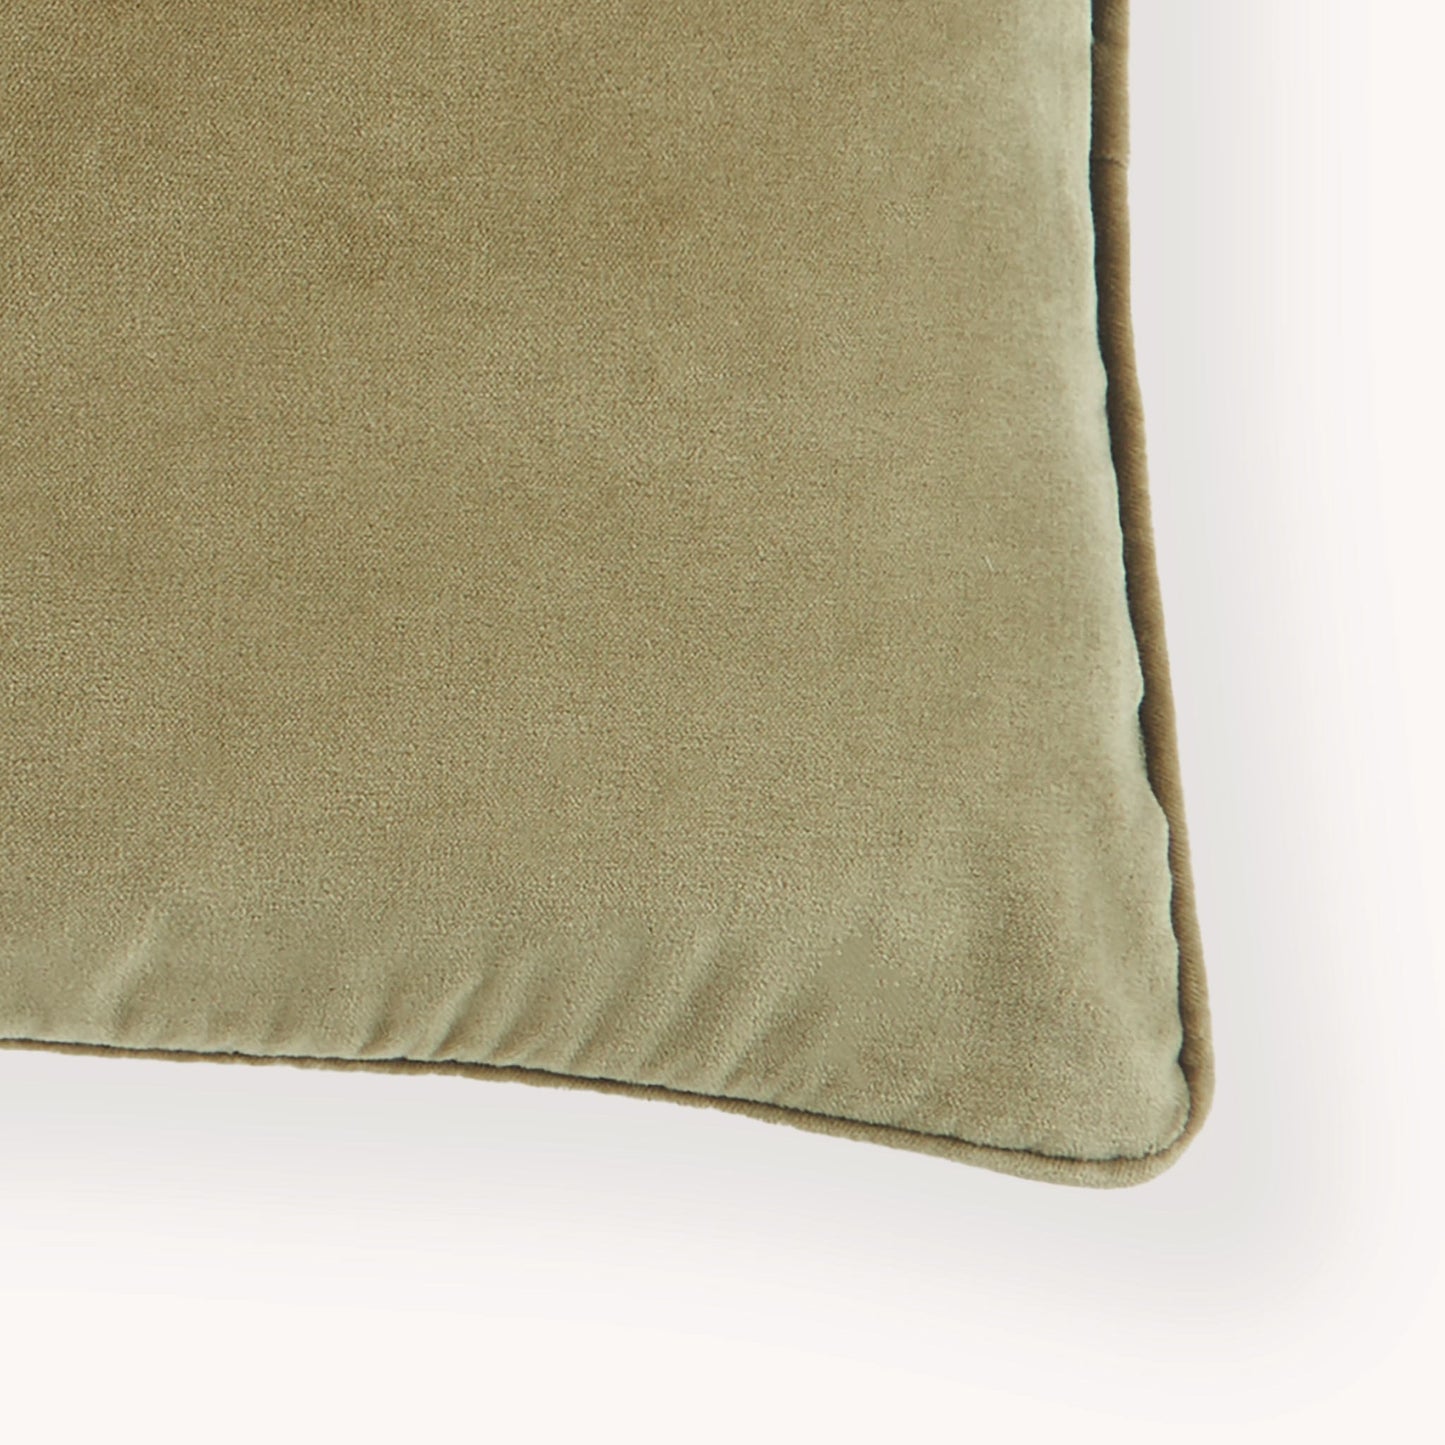 Rectangle Velvet Cushion - Oregano